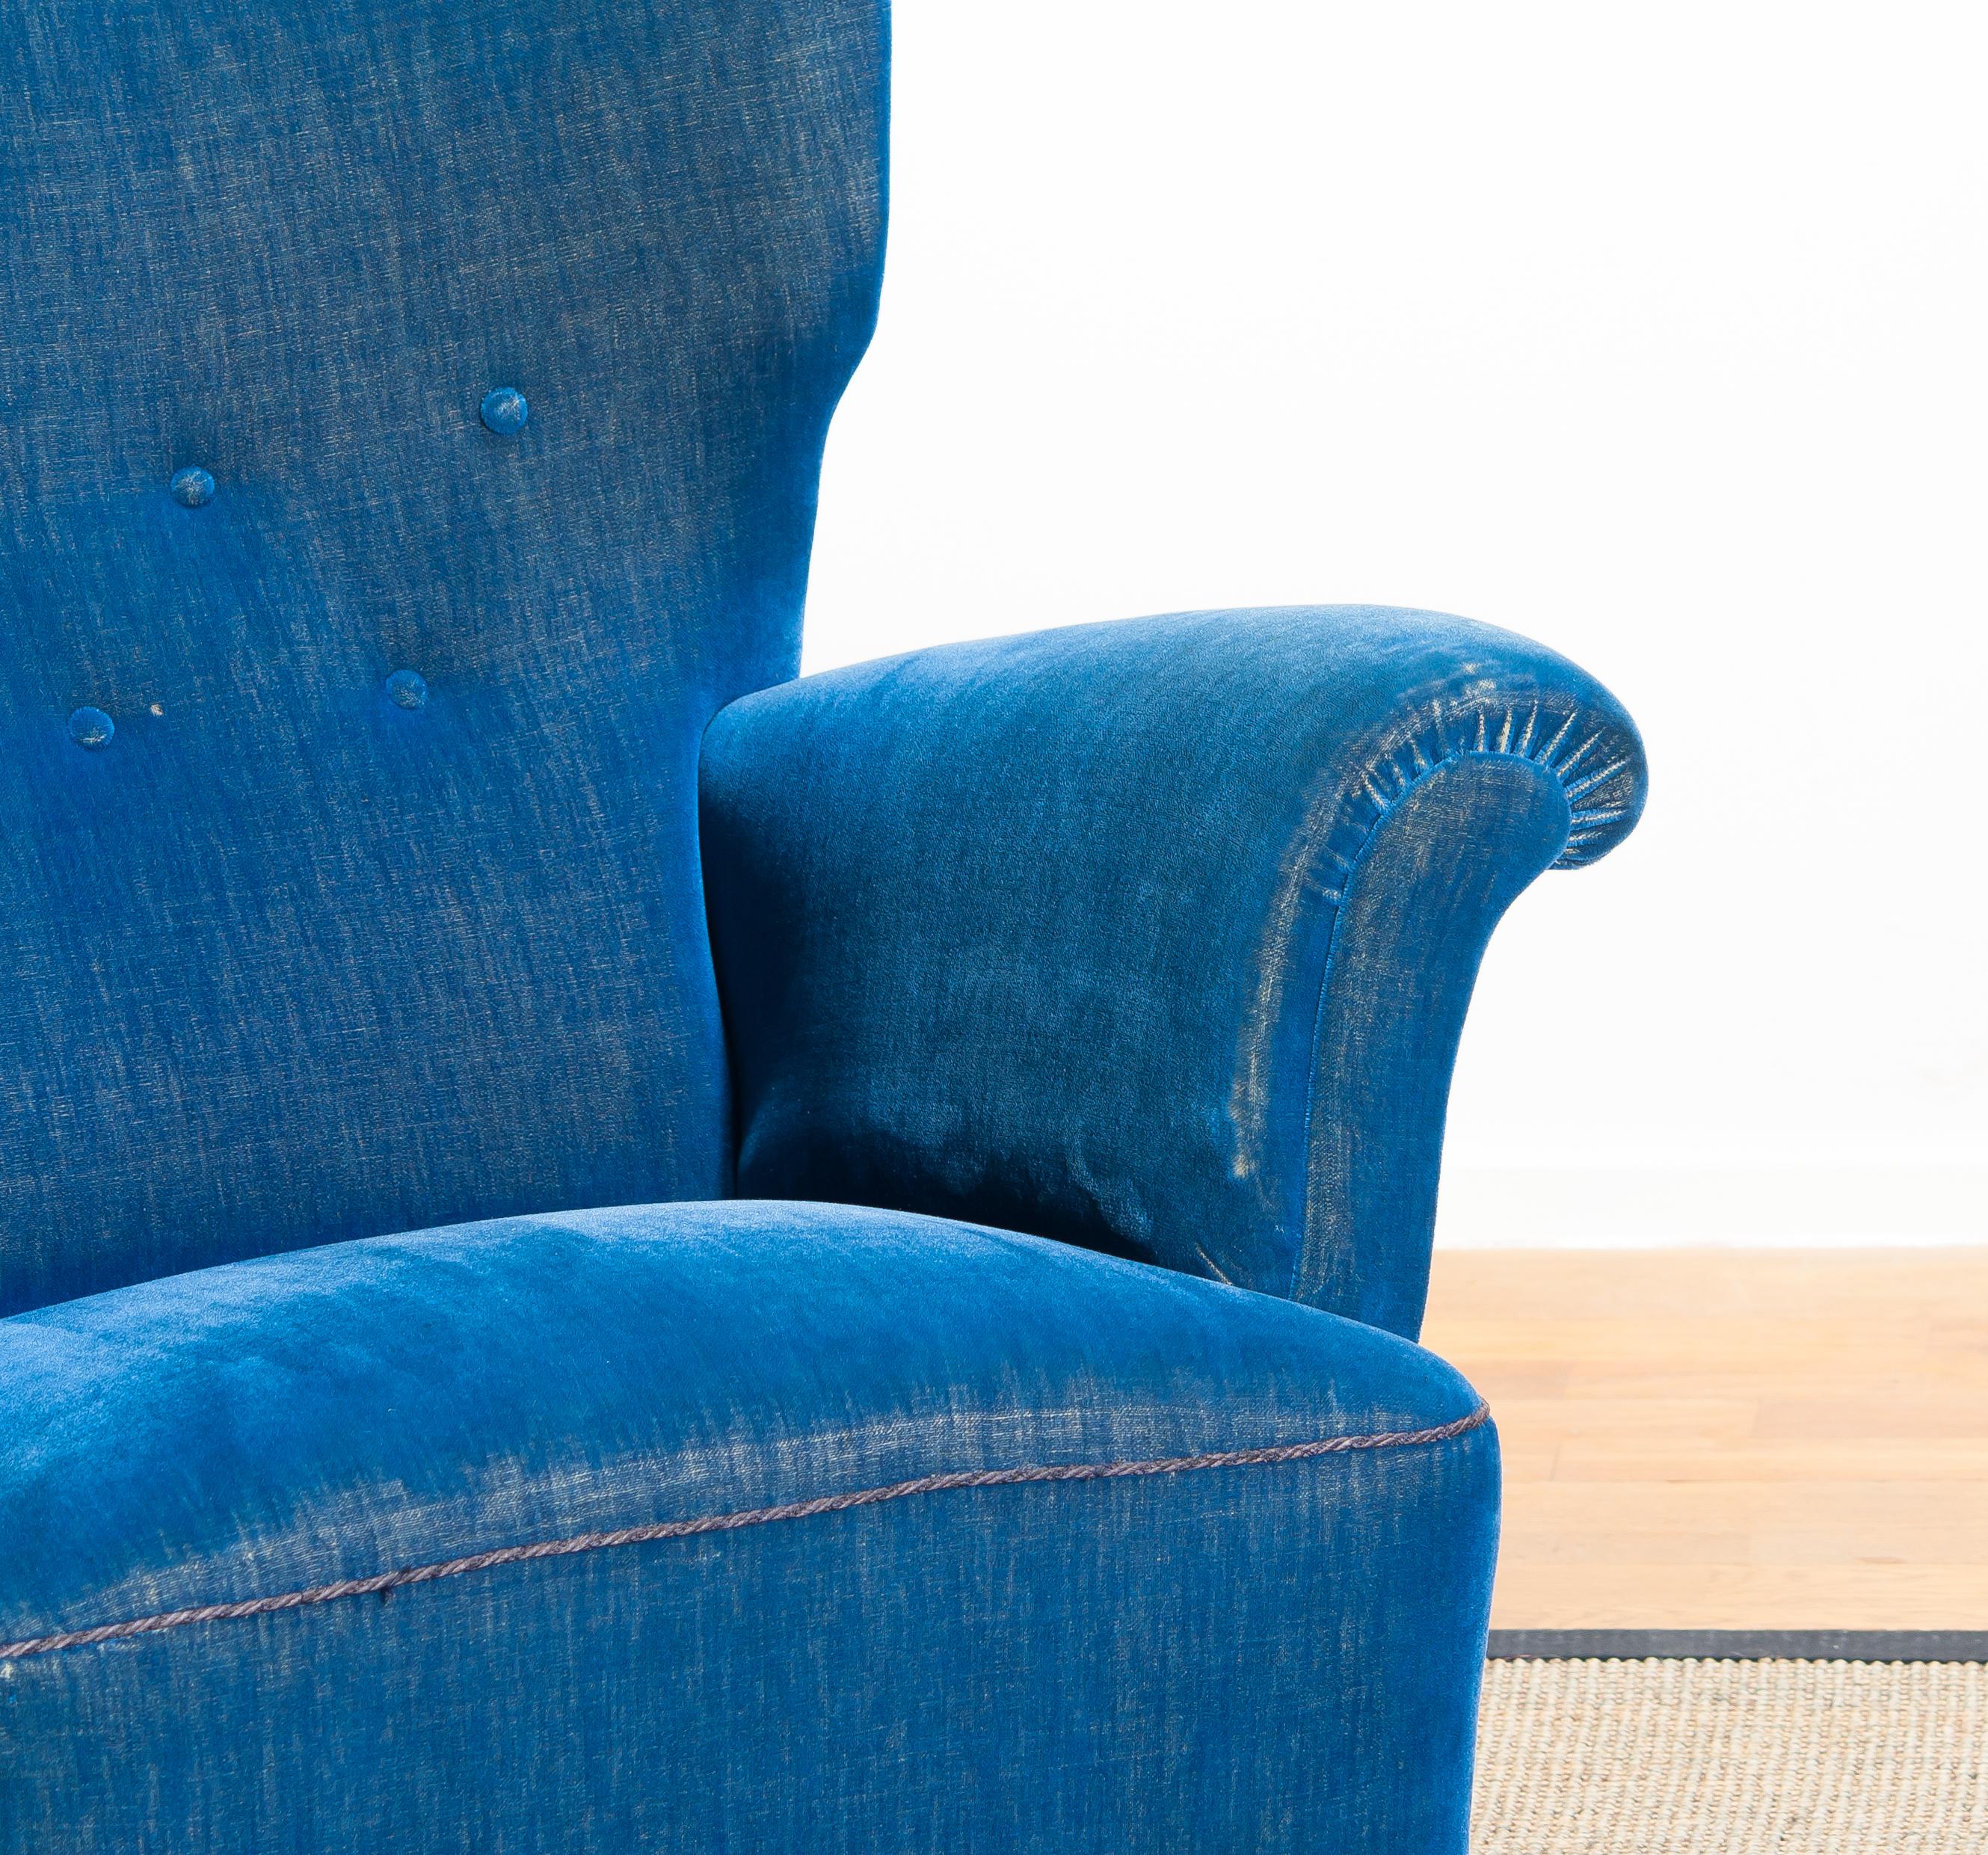 Mid-20th Century Scandinavian Royal Blue Velvet Wingback Chair, 1930-1940